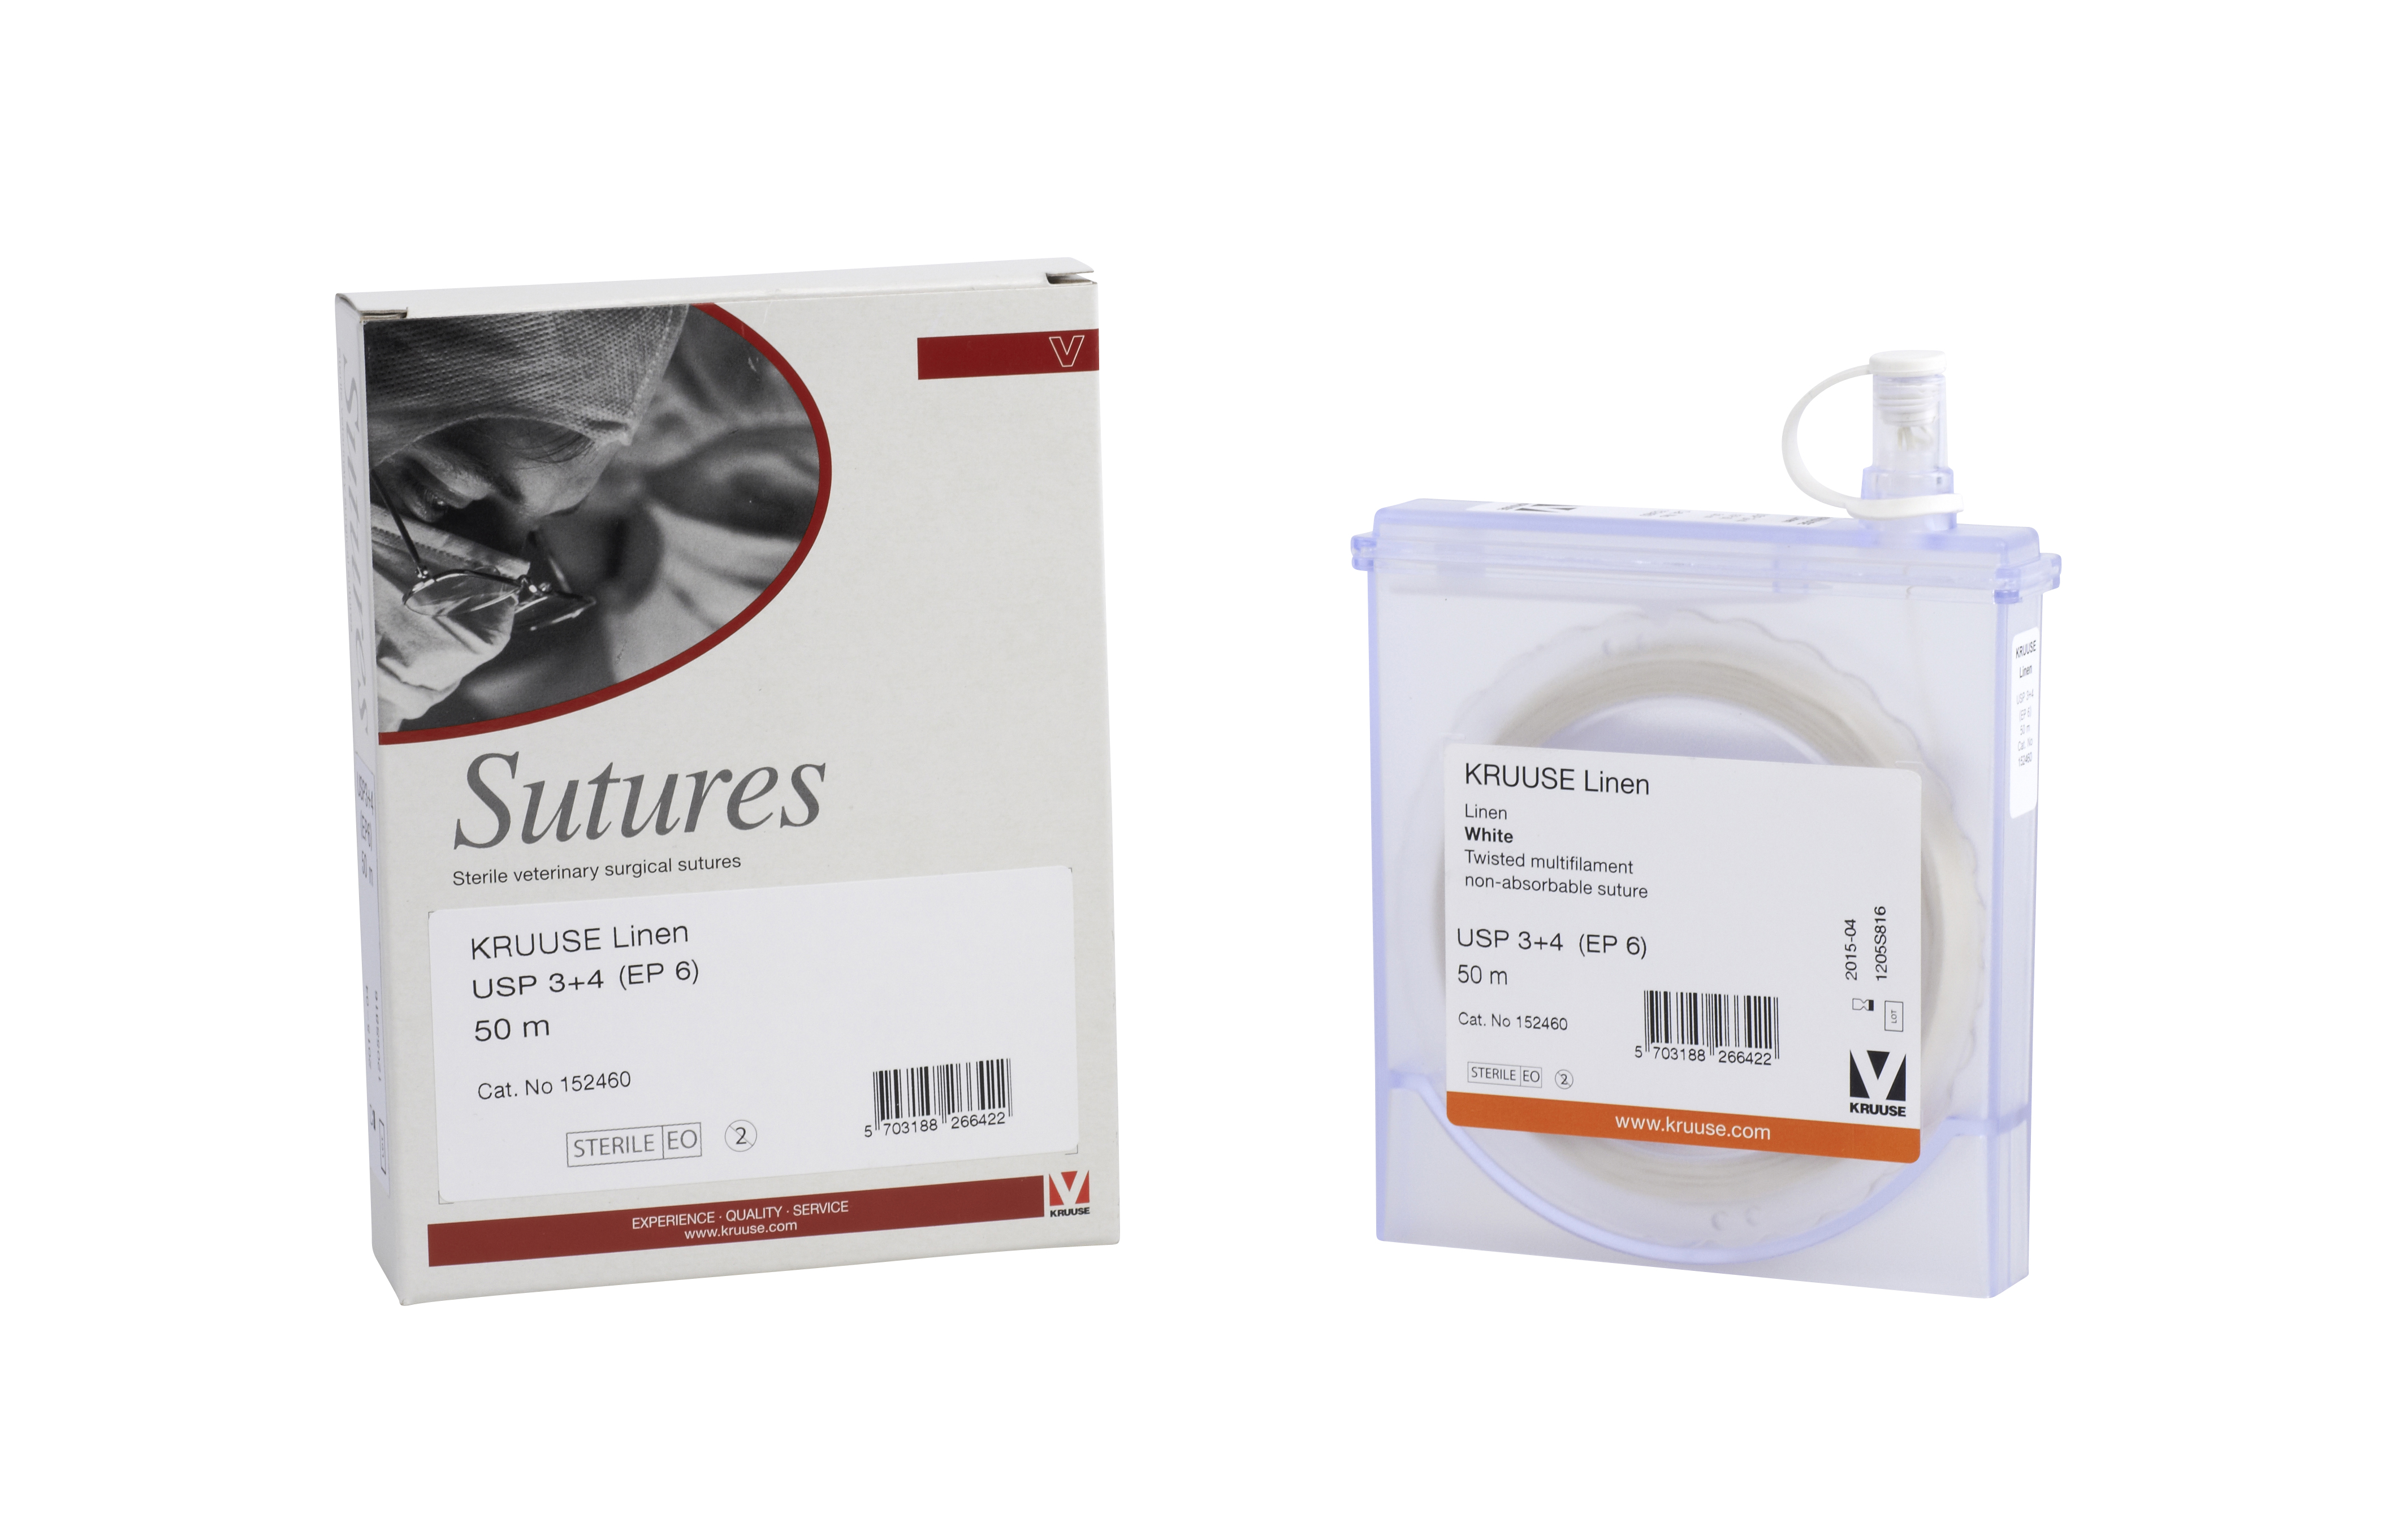 KRUUSE Linen suture, USP 3+4, 50 m, white